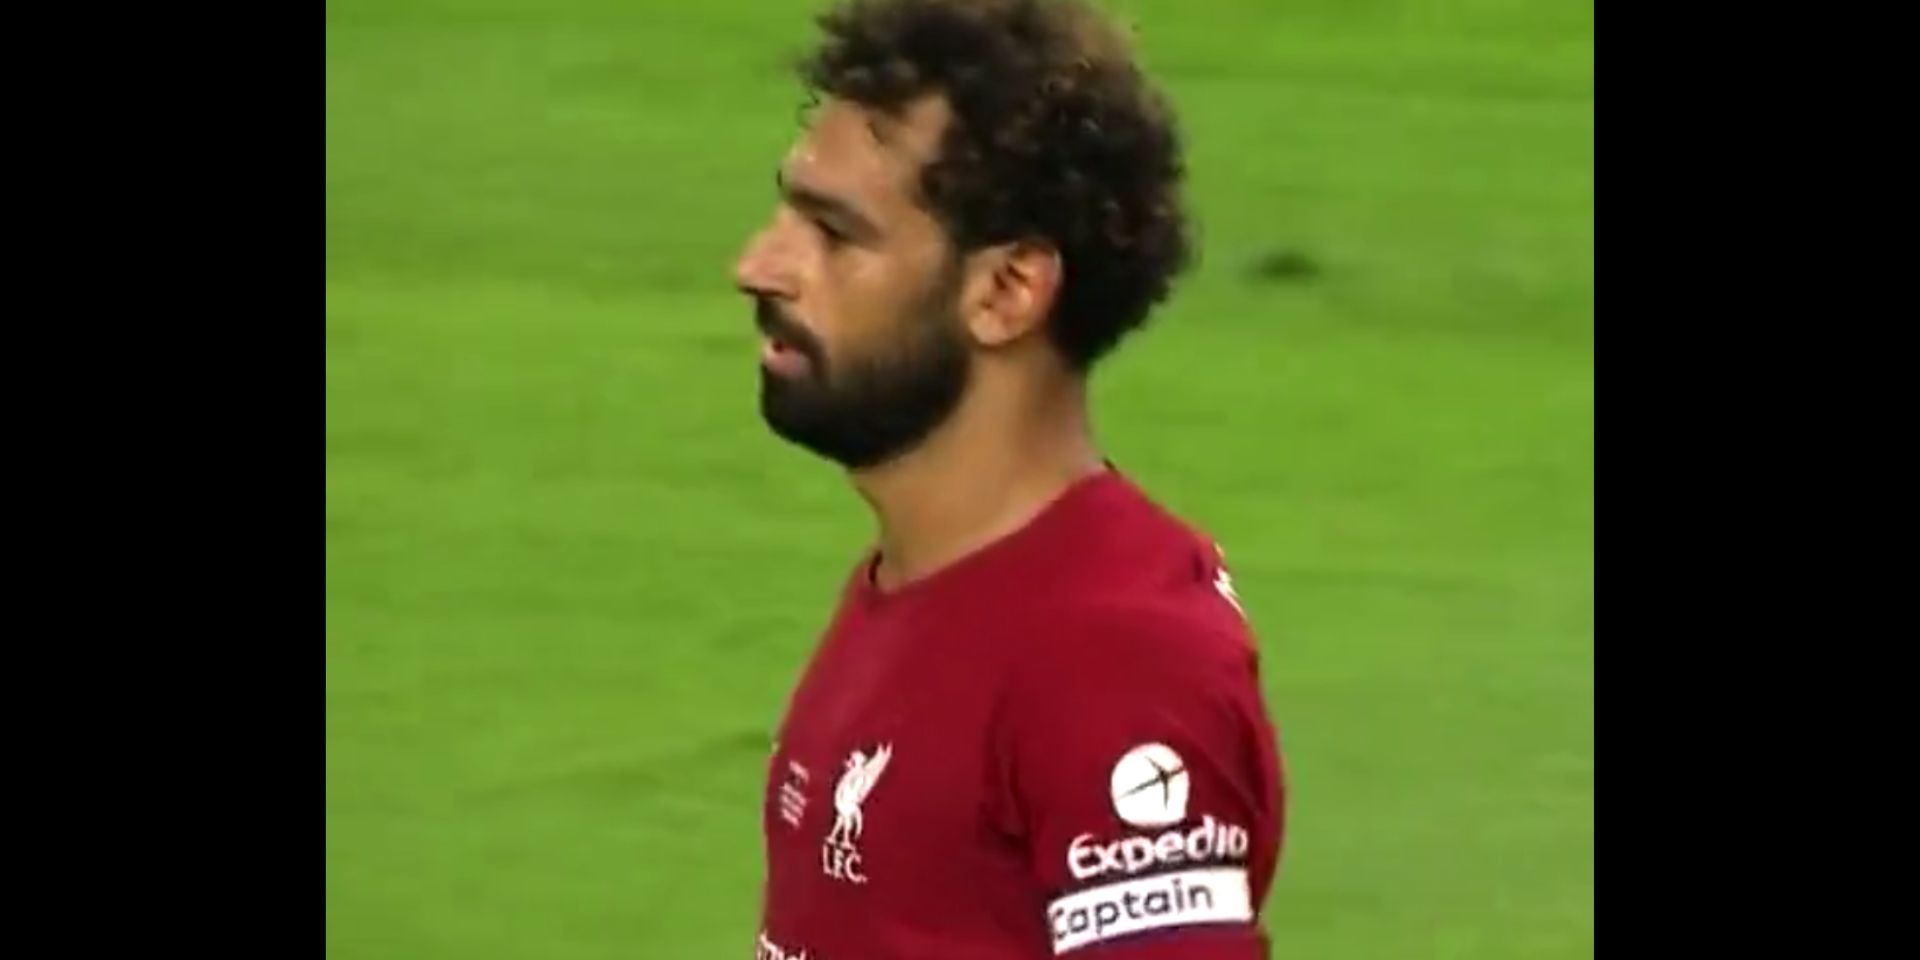 Stun Draak ik luister naar muziek Salah handed the captain's armband as he leads a young group of Reds